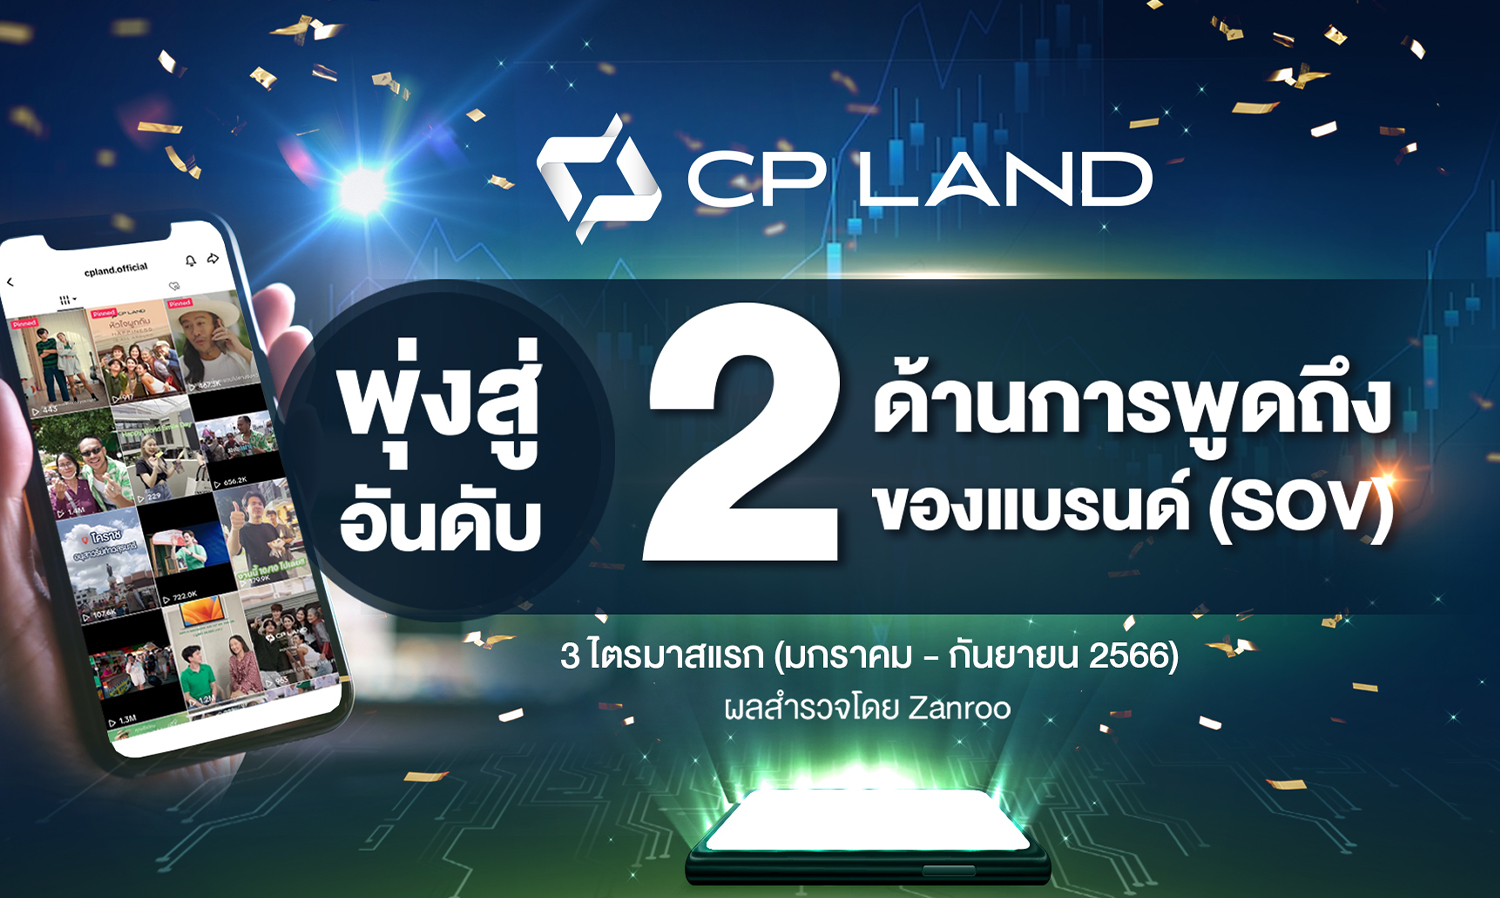 CP LAND สร้างปรากฎการณ์ Creative Marketing ถูกจัดอันดับ 2 แบรนด์อสังหาฯ ที่ถูกพูดถึงมากที่สุดในโซเชียลฯ ตลอดสามไตรมาส จากผลสำรวจ Zanroo